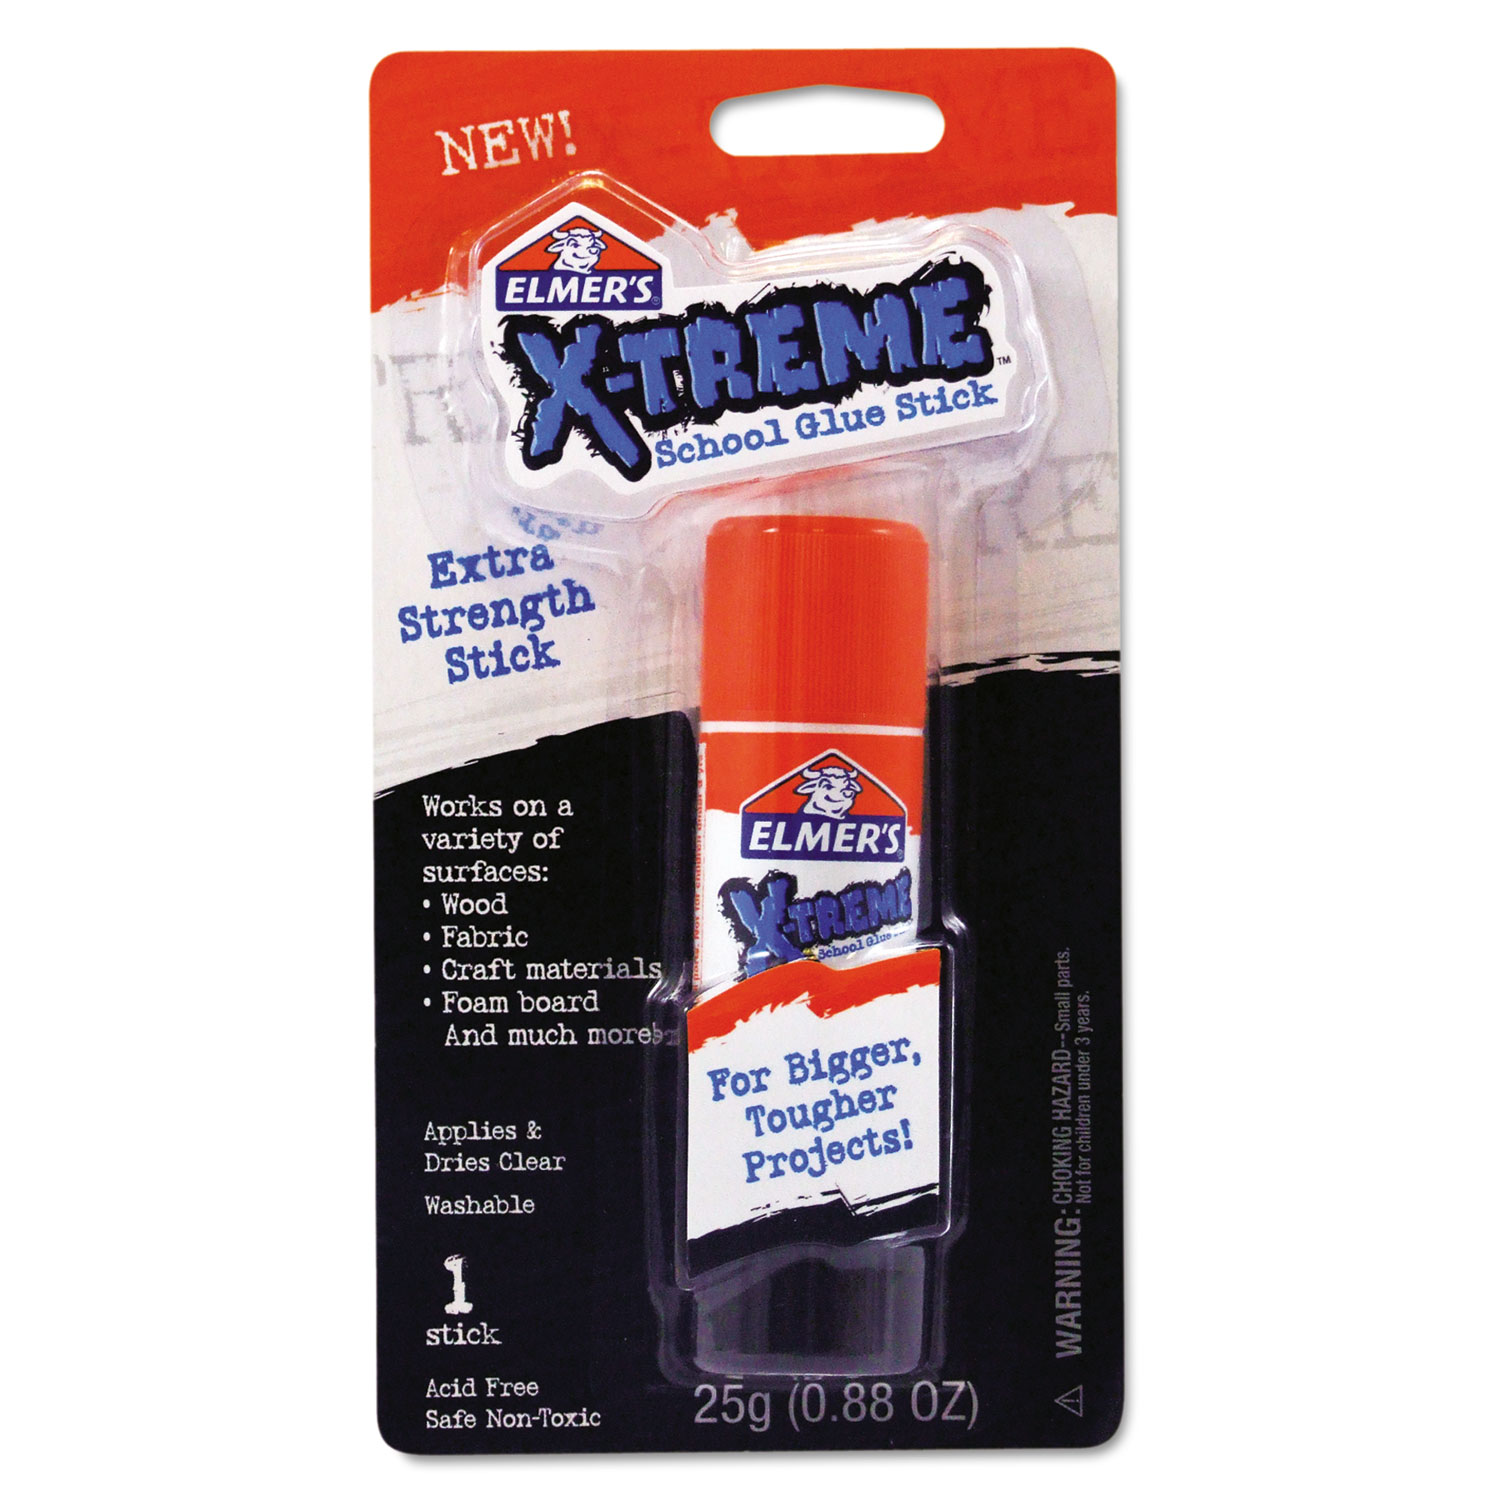  Elmer's E584 X-TREME School Glue Stick, 0.88 oz, Applies and Dries Clear (EPIE584) 